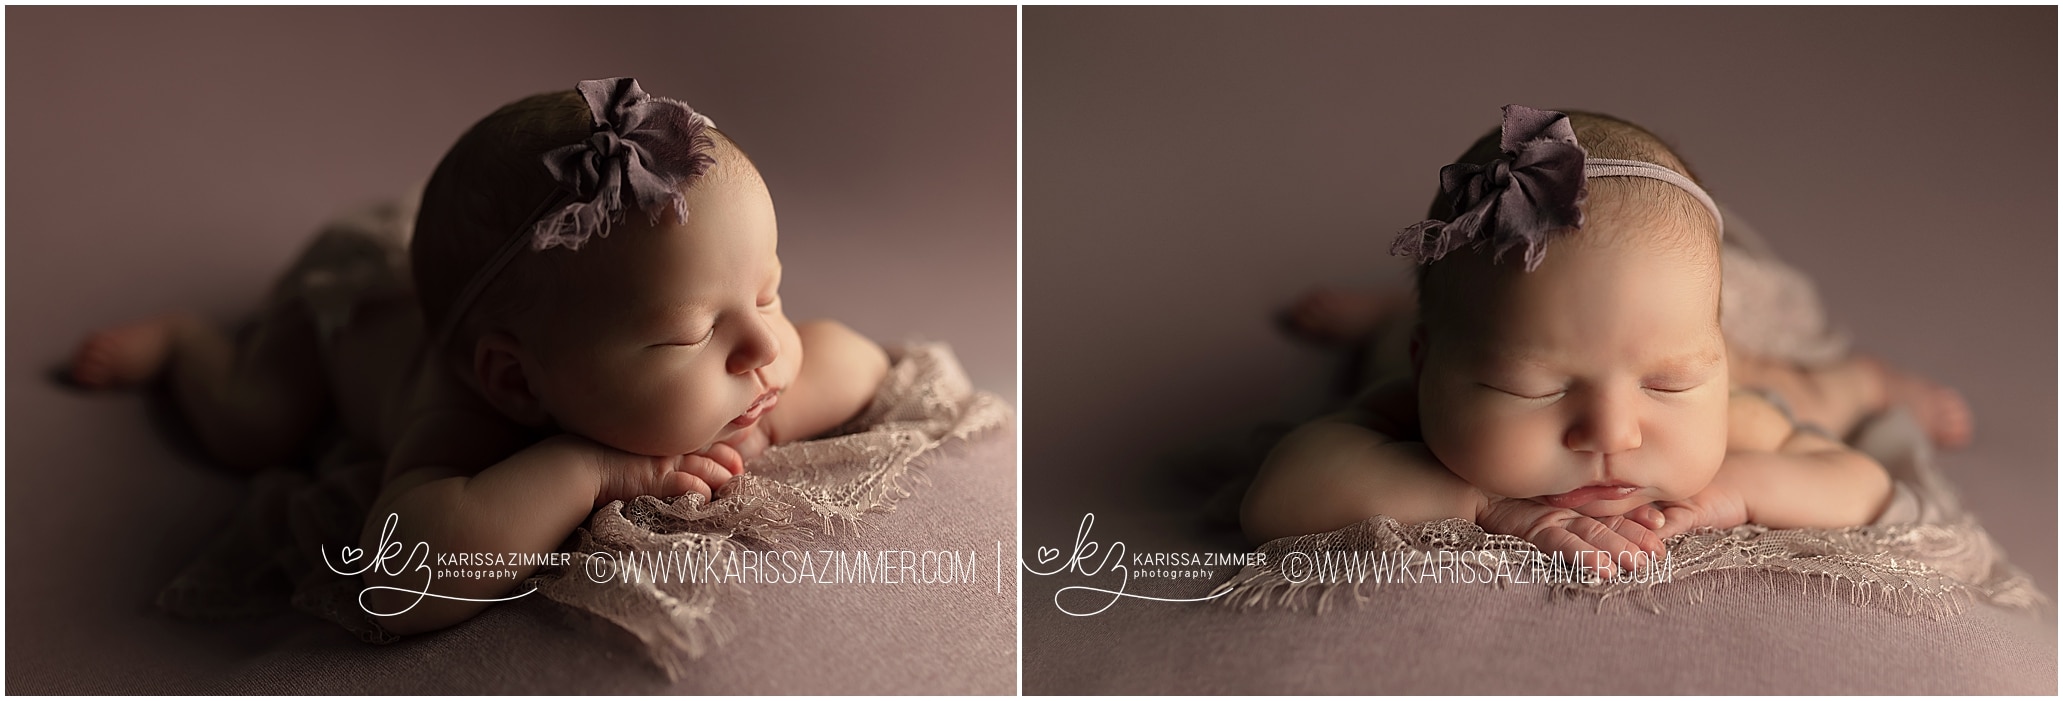 Newborn Photography studio, baby photos near me Harrisburg PA, Central PA Newborn Photography